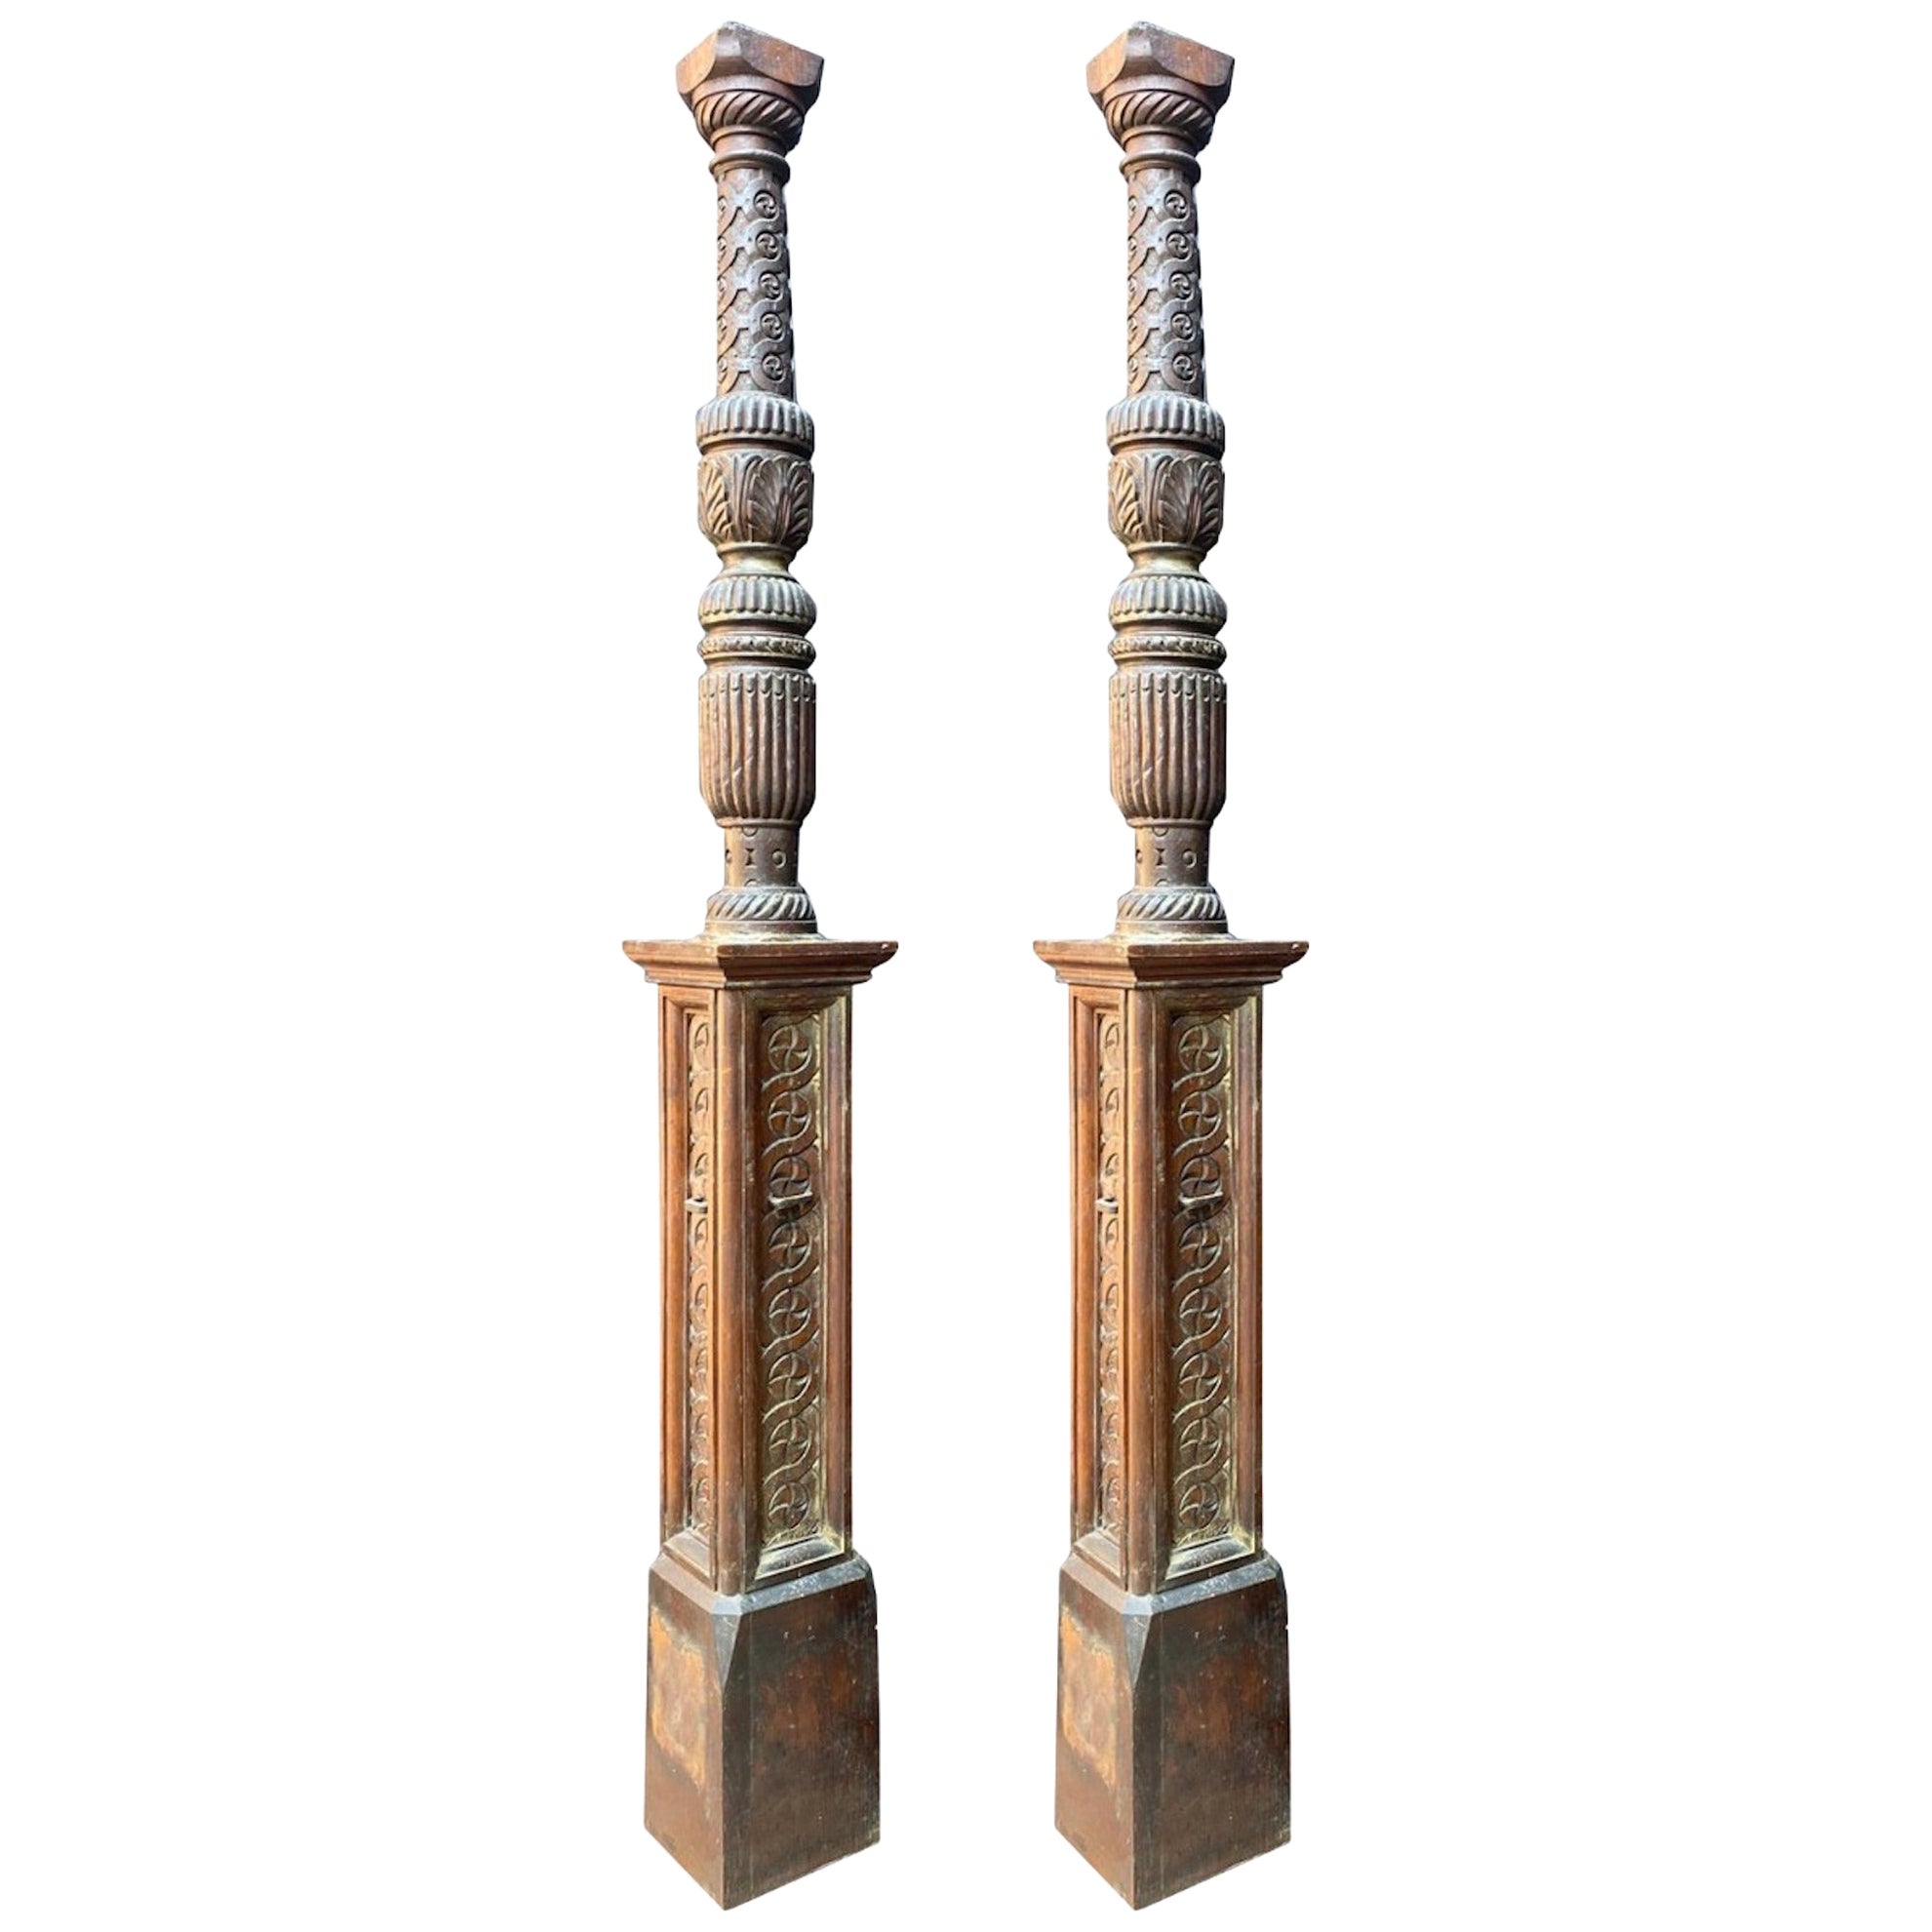 Two Tudor Period Carved Oak Columns